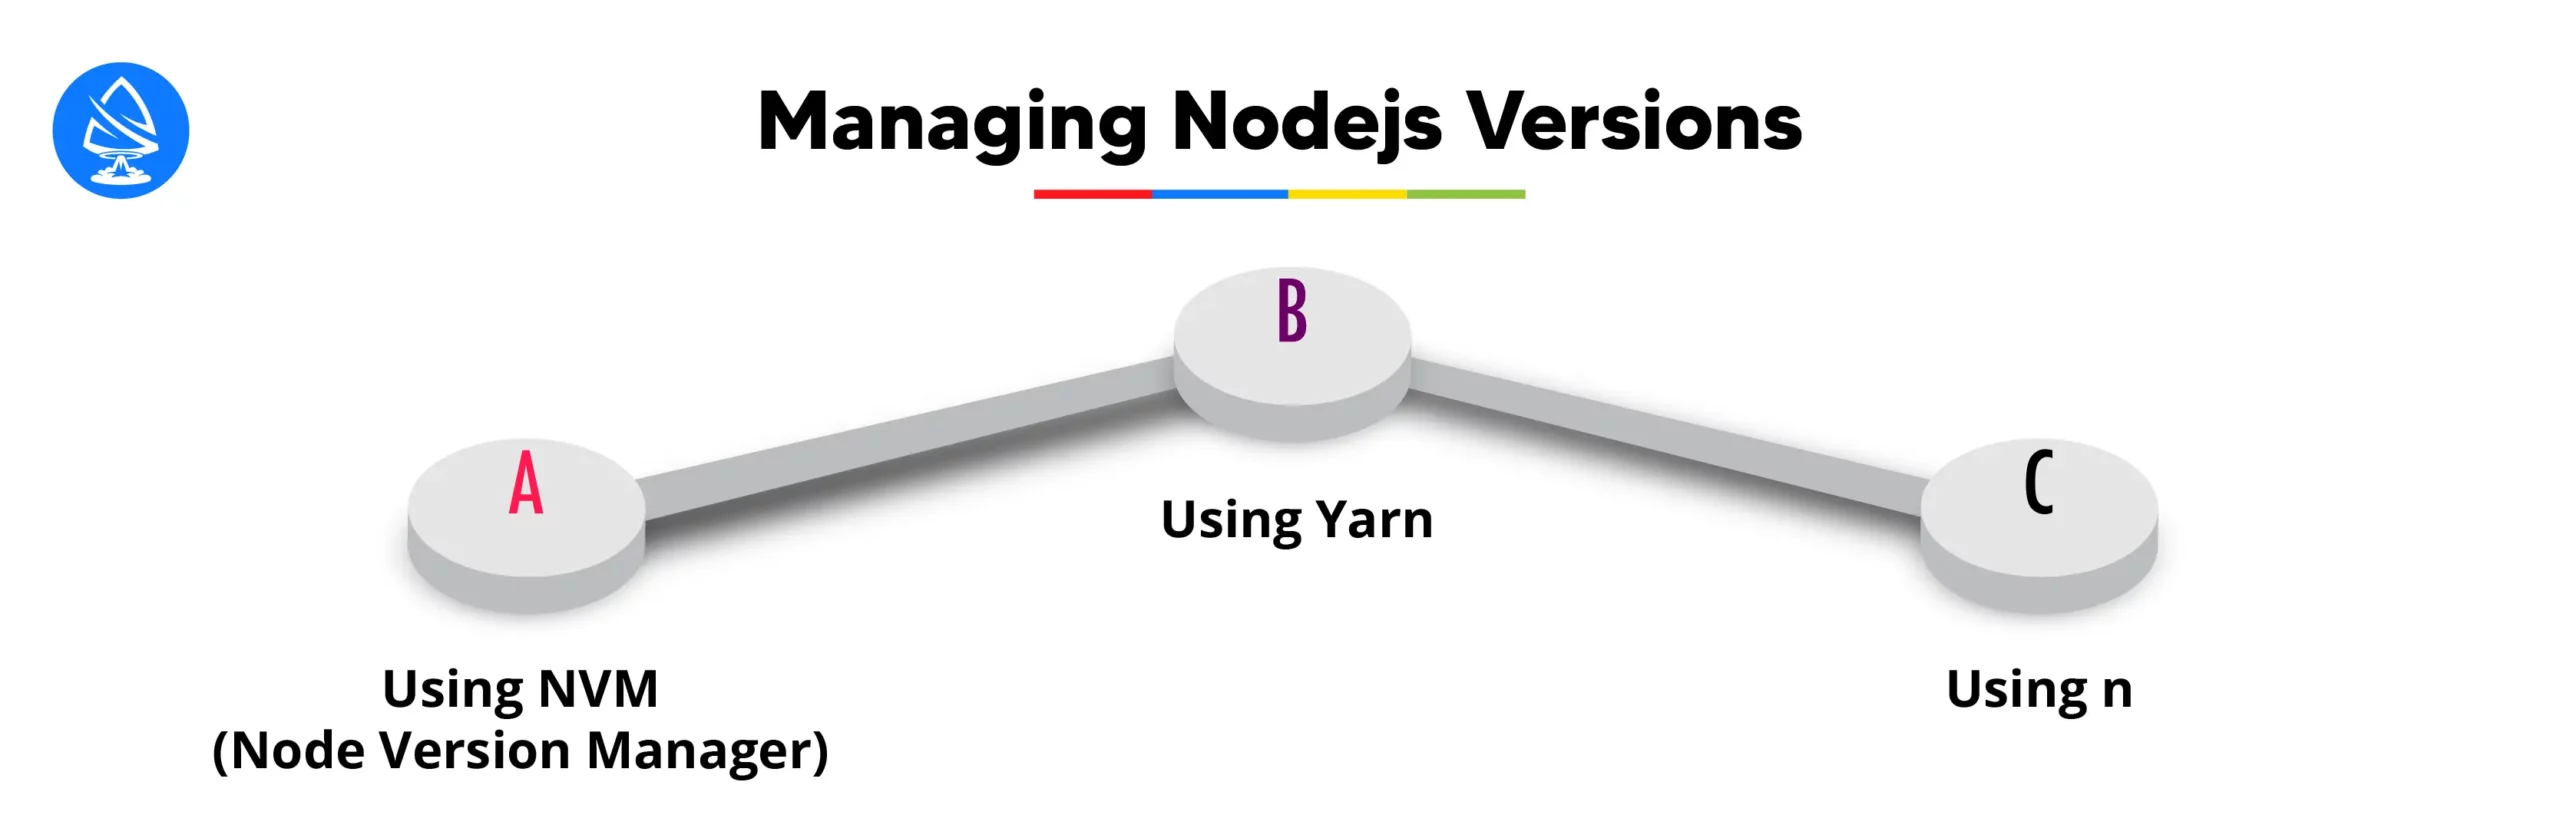 Managing Nodejs Versions with NPM 